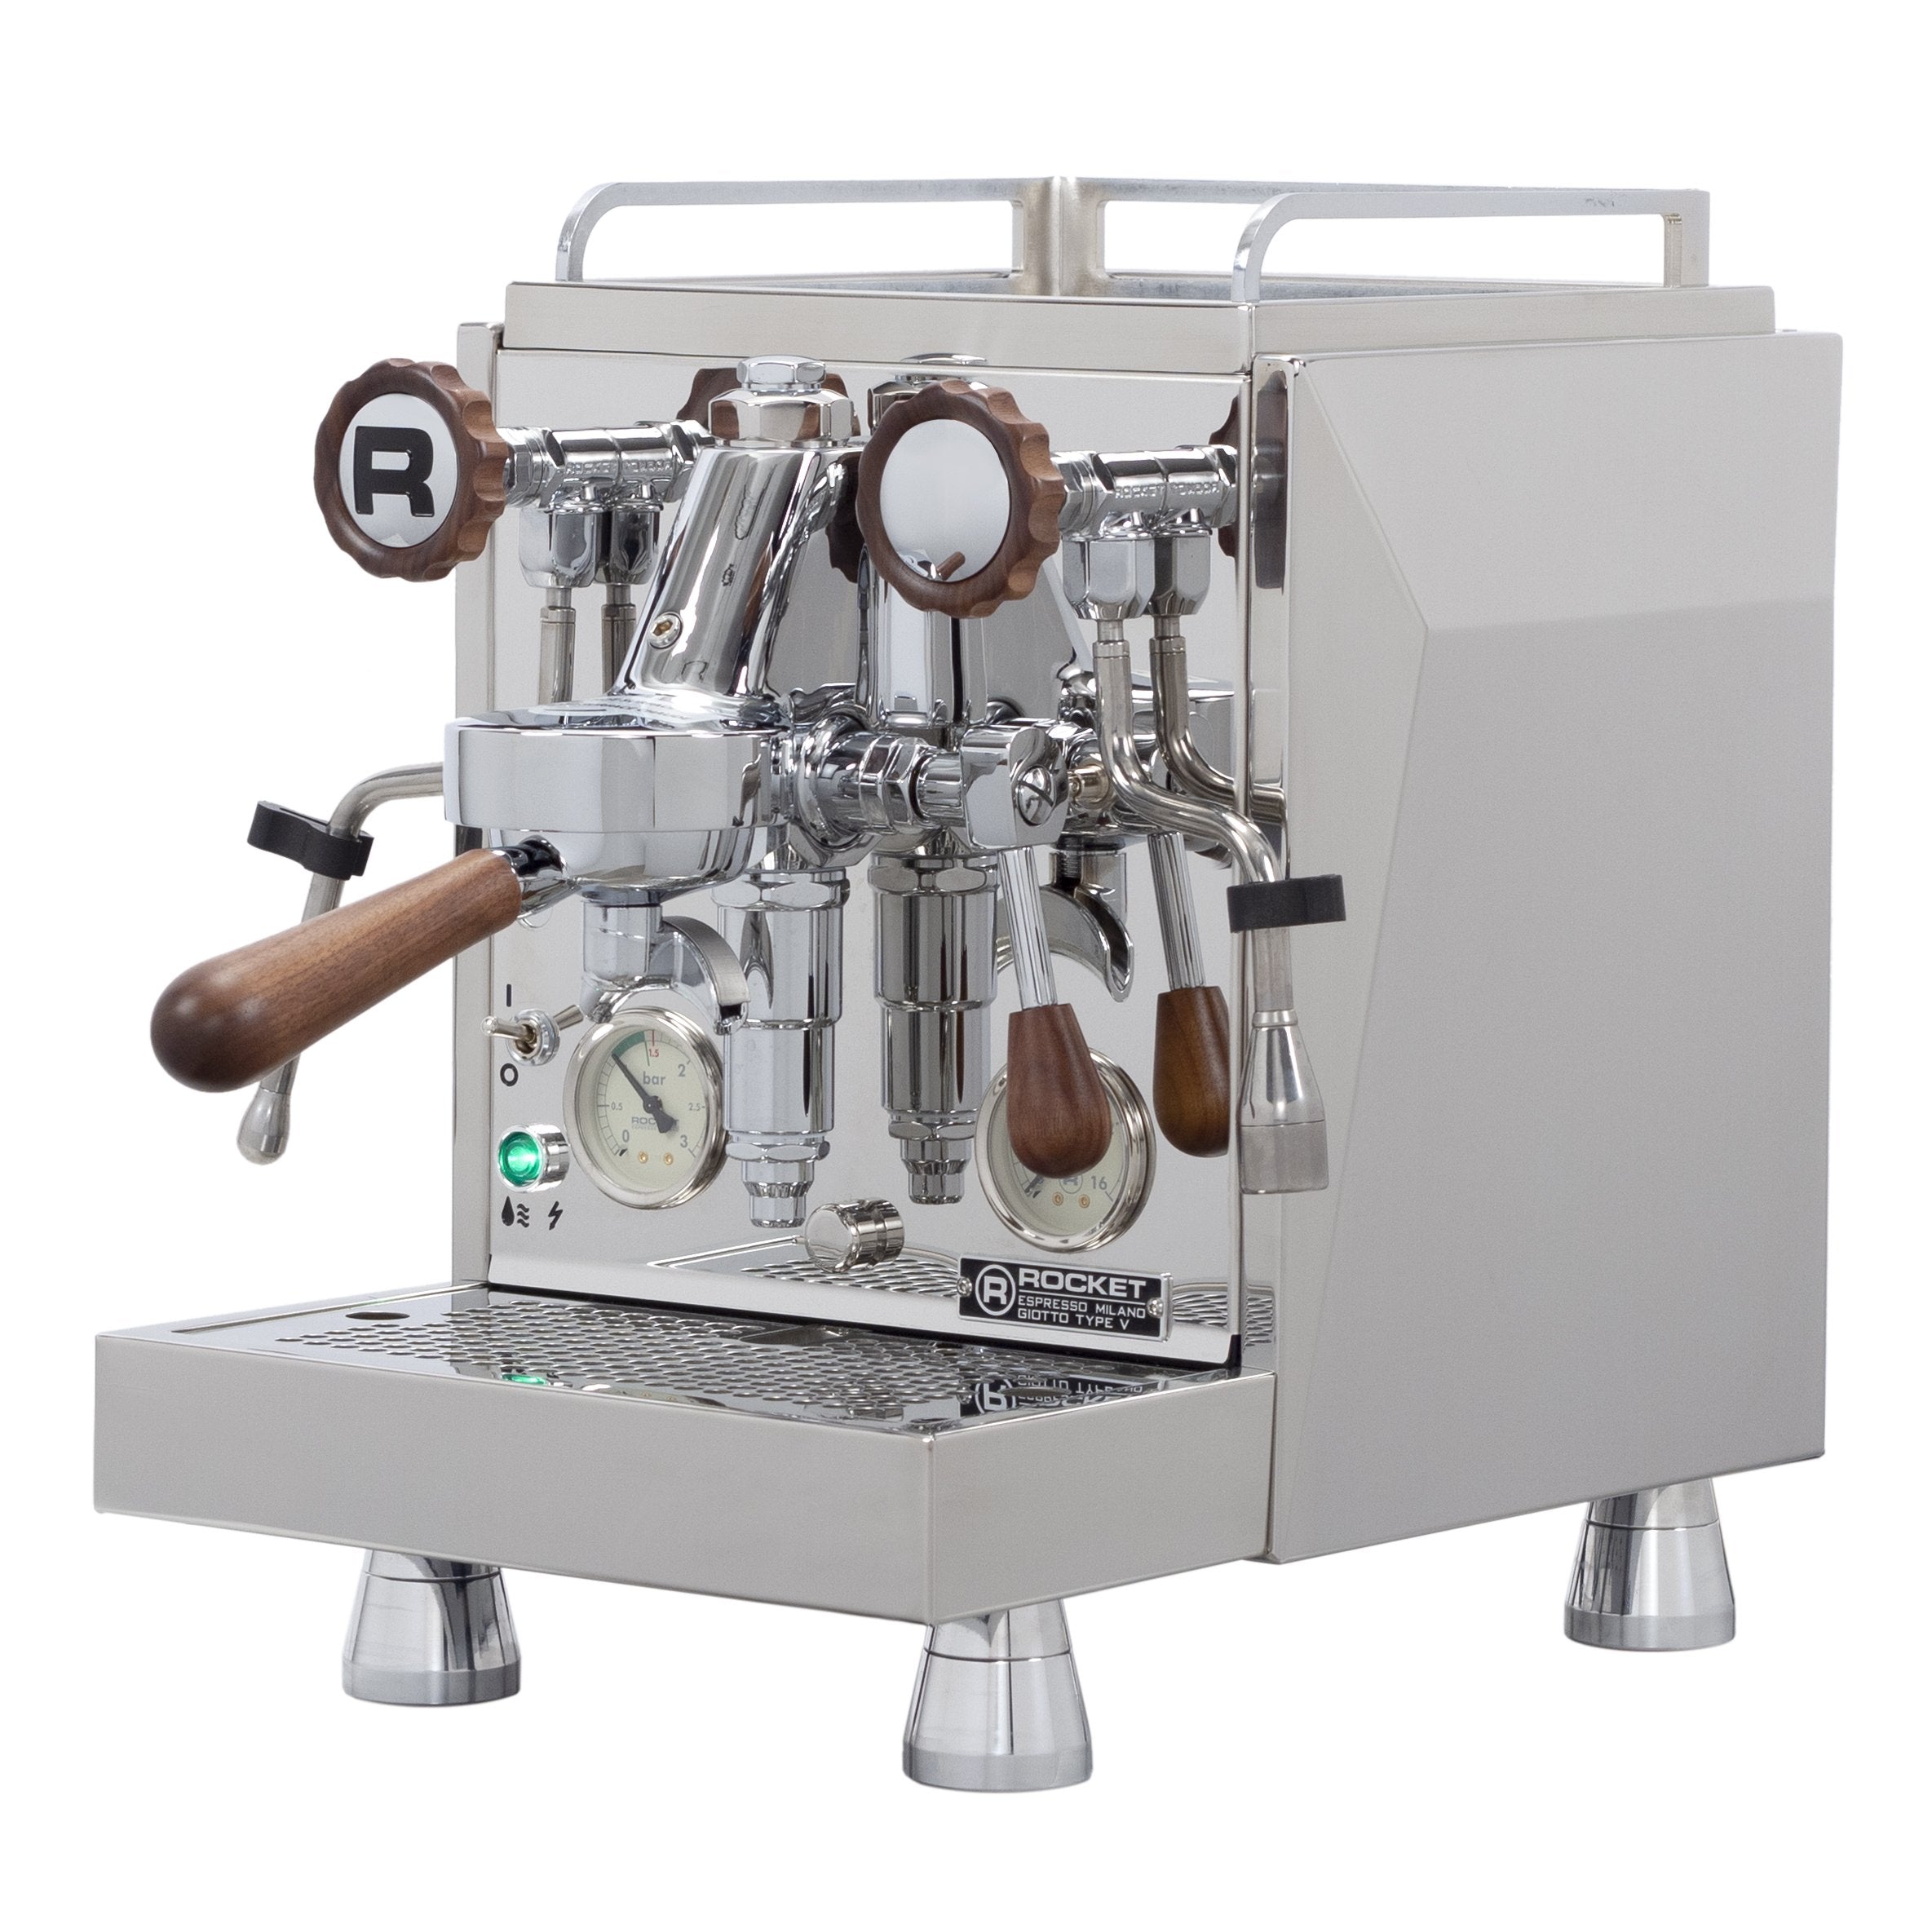 Rocket Espresso Giotto Cronometro V Espresso Machine - Walnut 